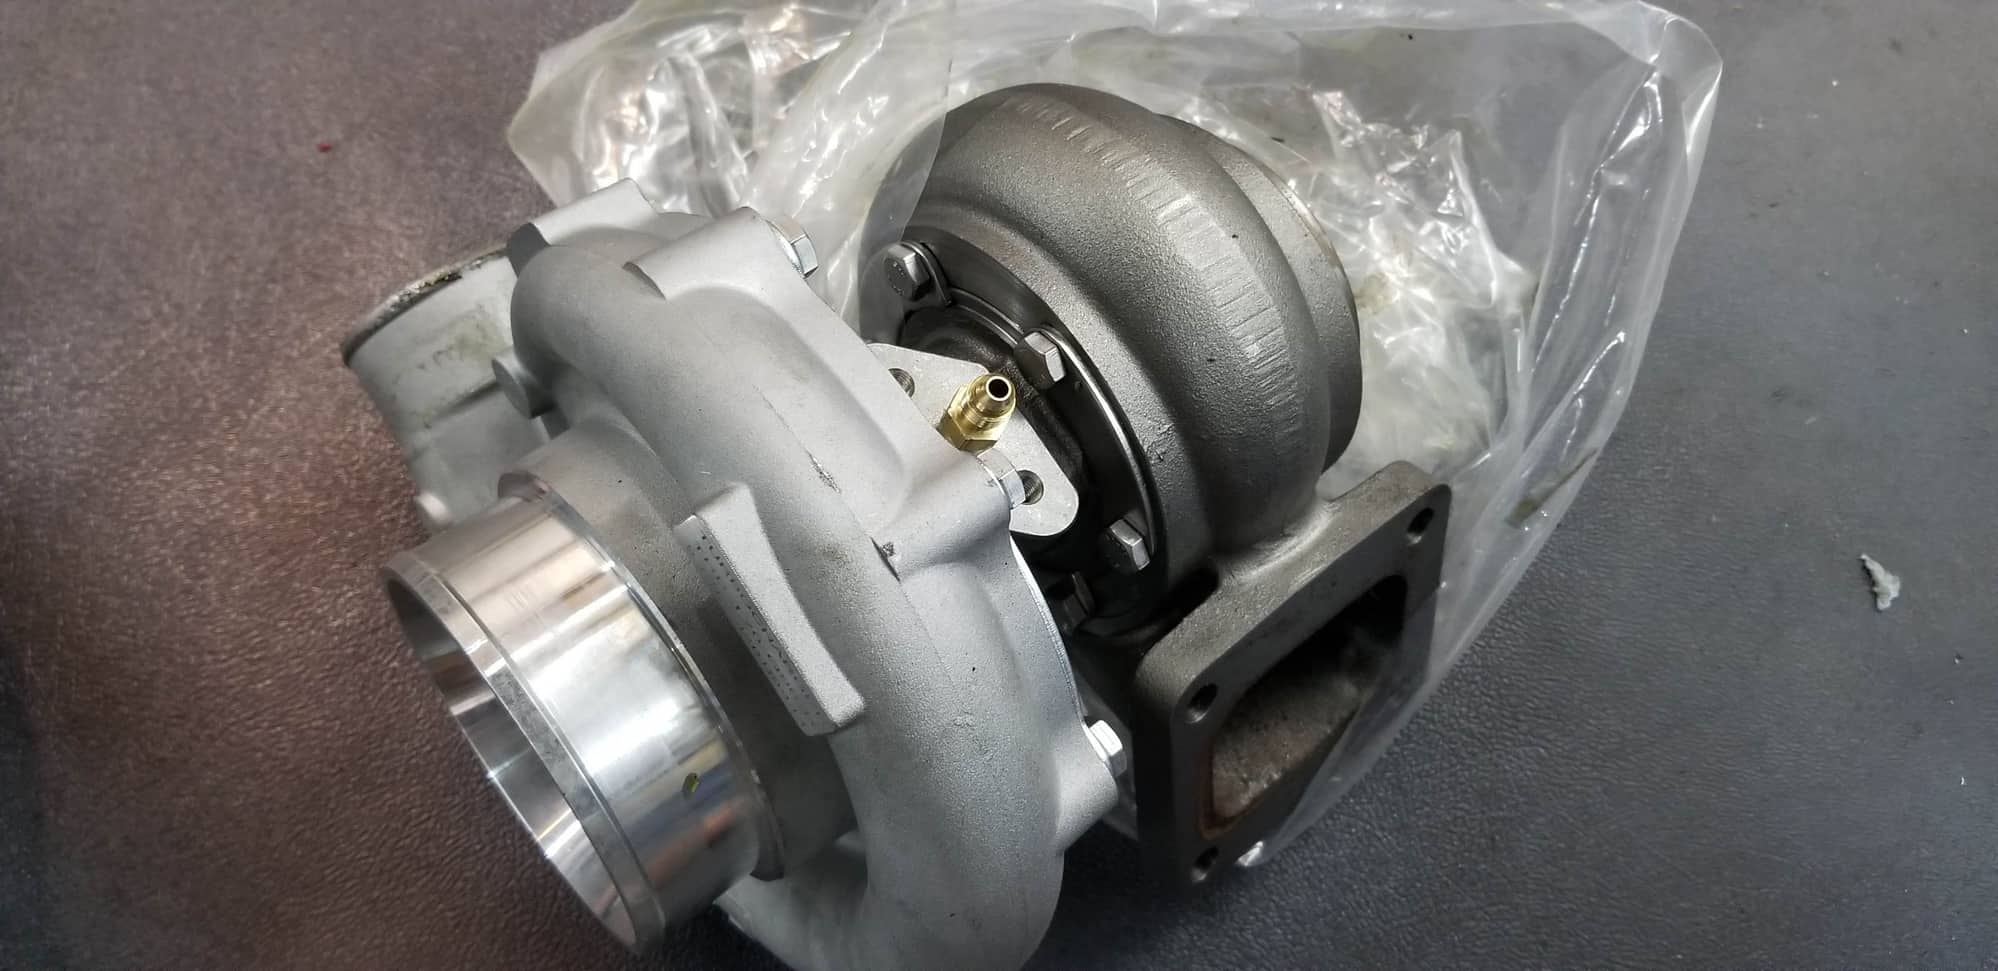  - CX Racing 76mm ball bearing turbo - Fillmore, CA 93015, United States